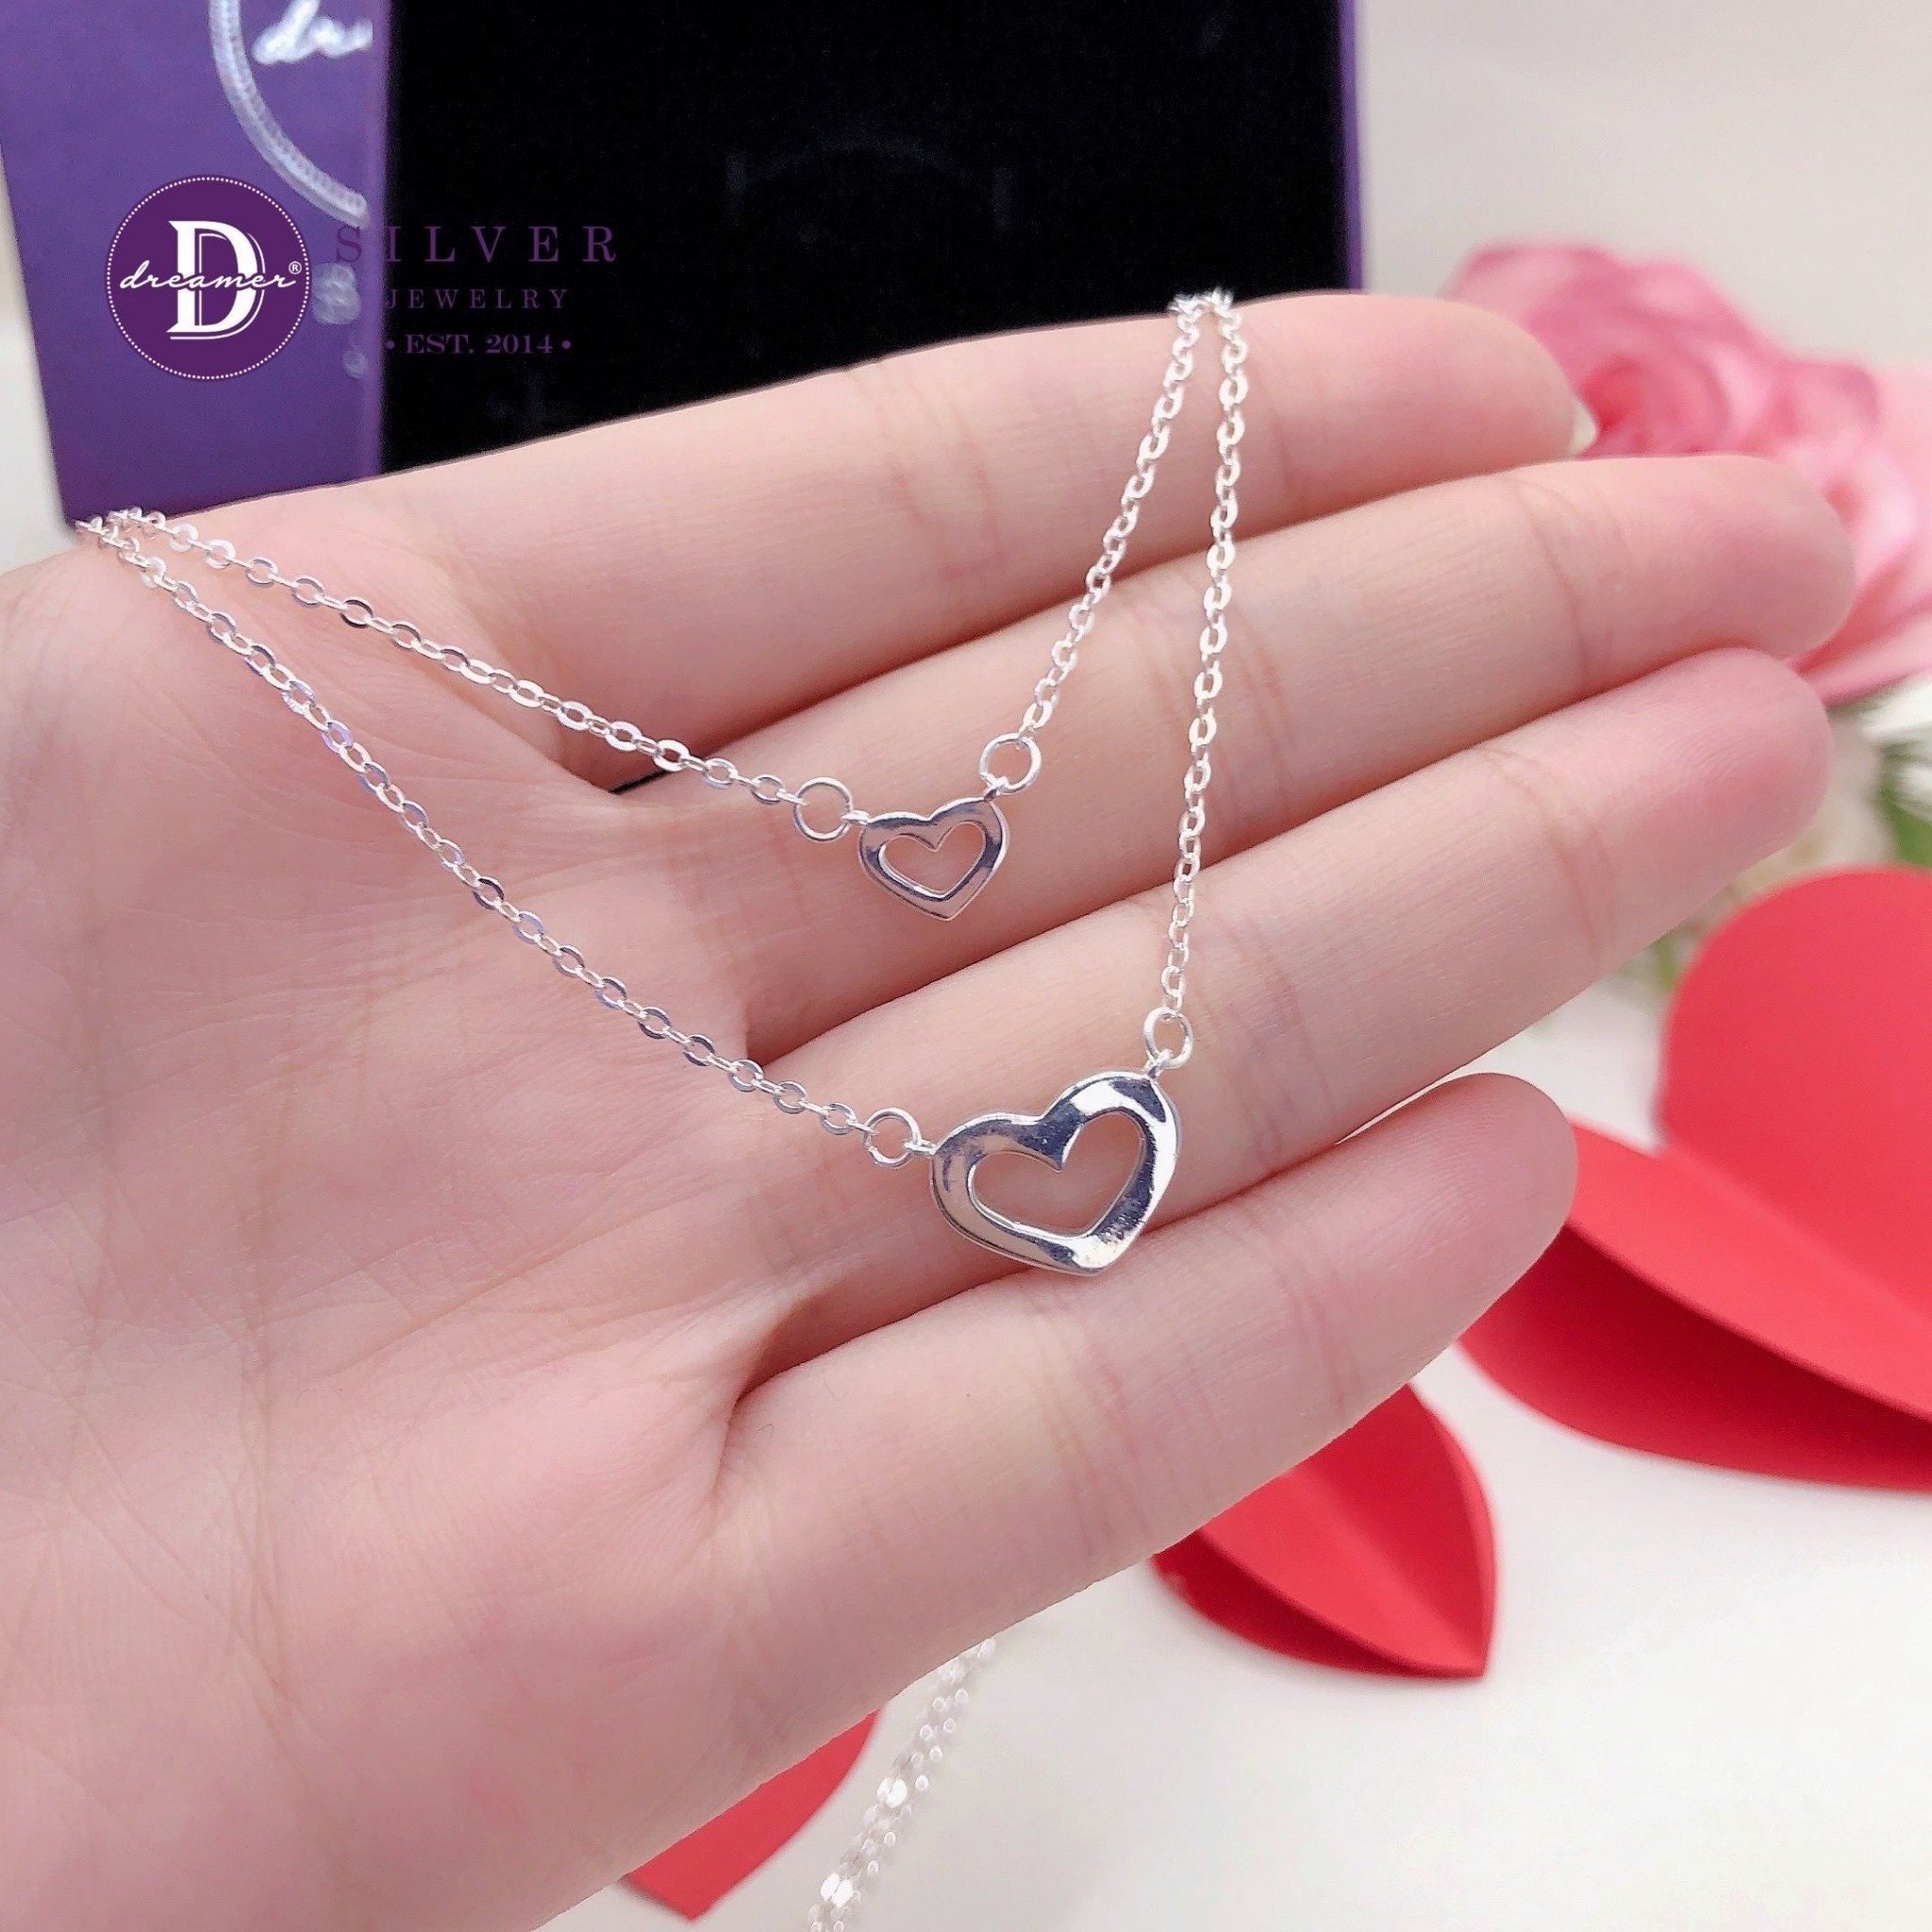  Double Heart Double String  Silver Necklace - Dây Chuyền Kiểu 2 Dây Mặt Trái Tim To Nhỏ Bạc 925 - Dây Chuyền Valentine - Ddreamer 375DCT 